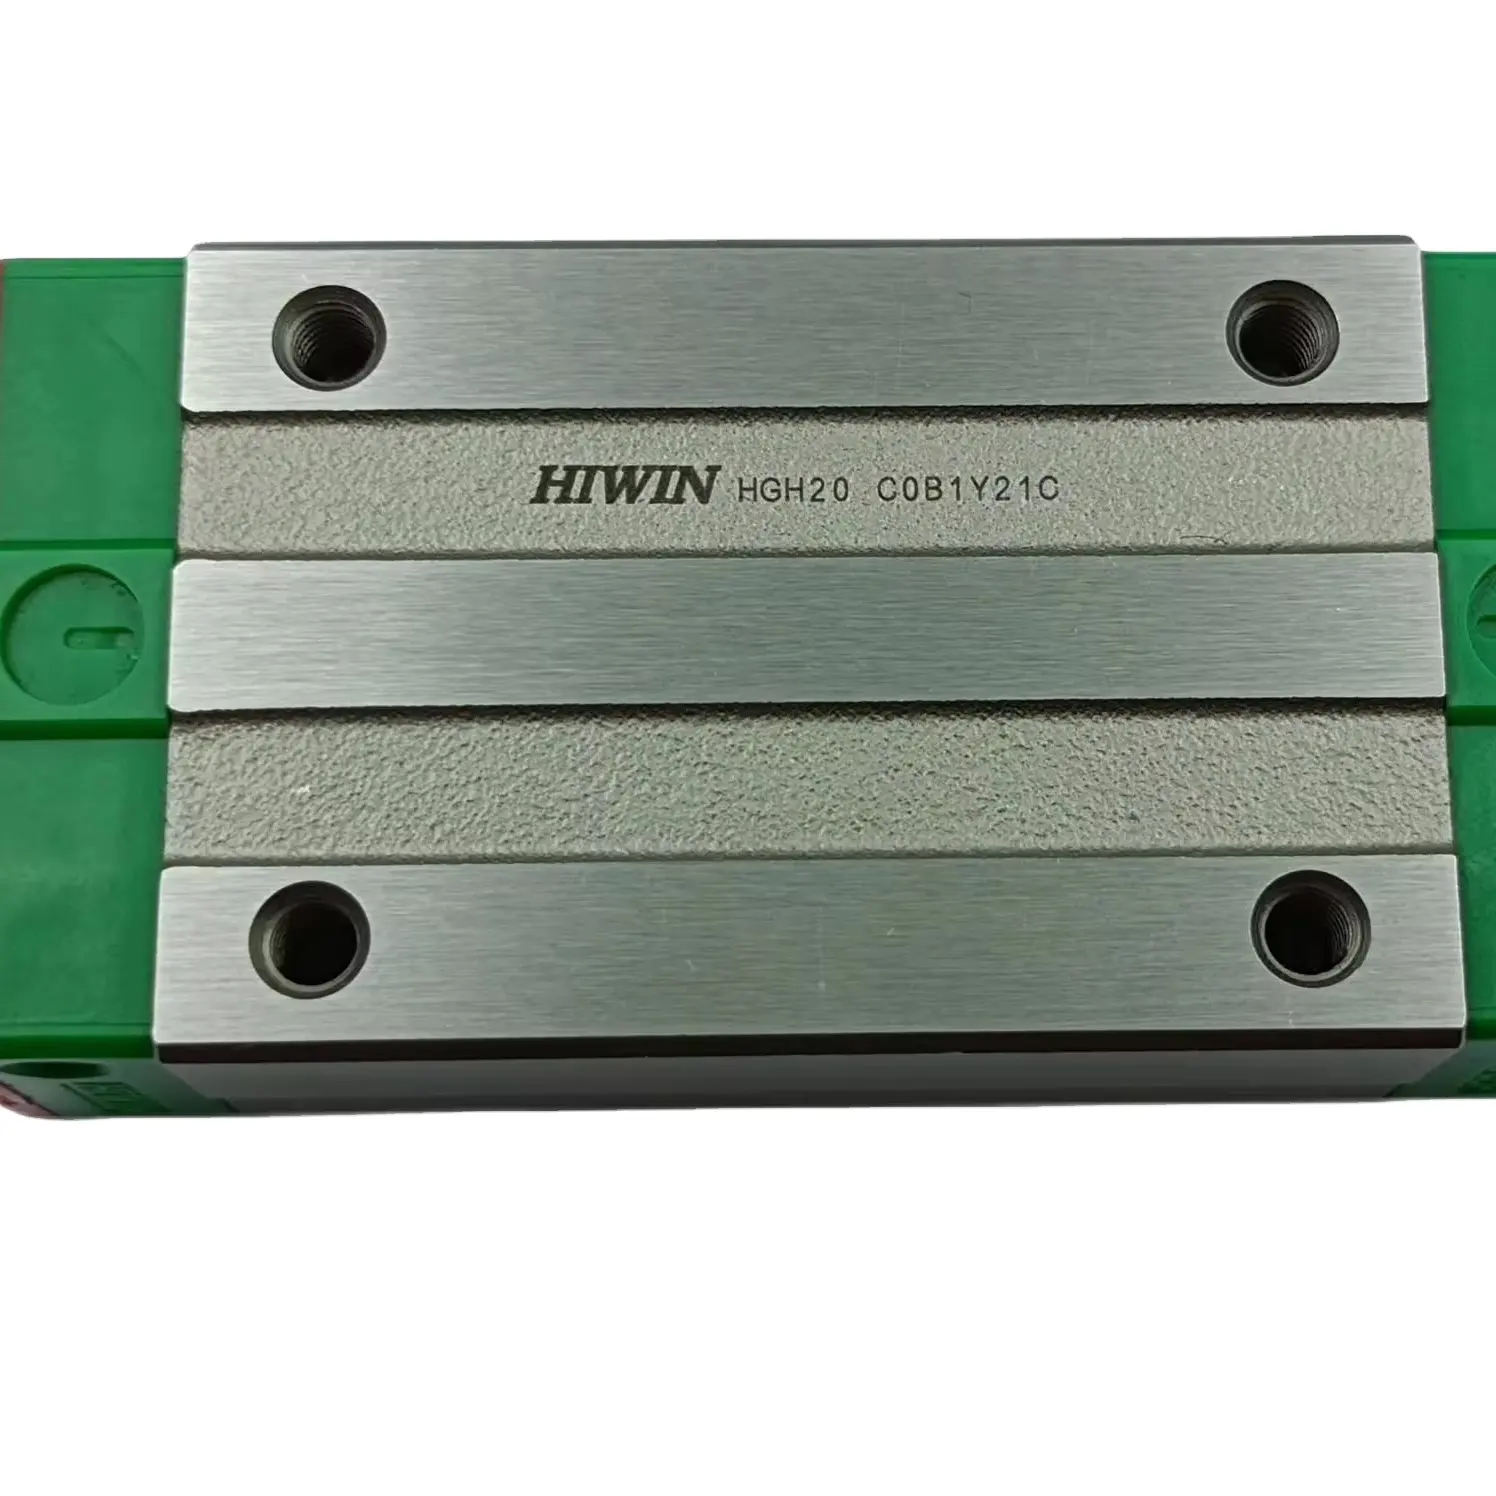 Hiwin WE Type Linear Guide Rail Block HGH20 Linear Sliding Bearing Actuator for Machine Tool